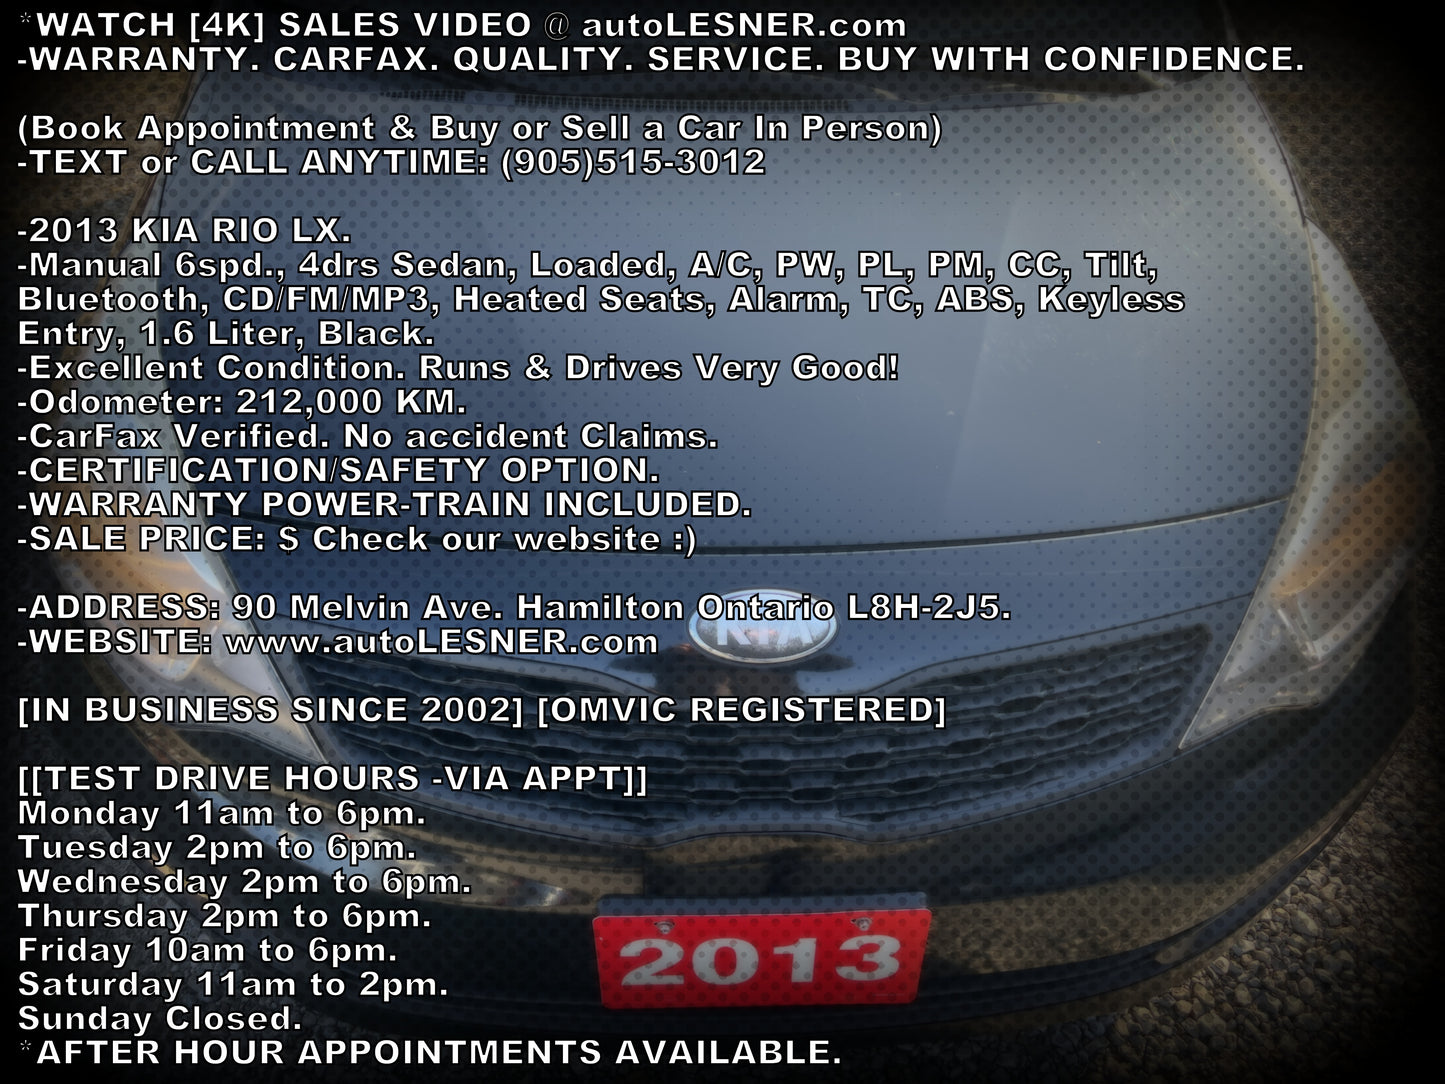 2013 KIA RIO LX -Manual 6spd A/C Loaded 212,000KM -Warranty!